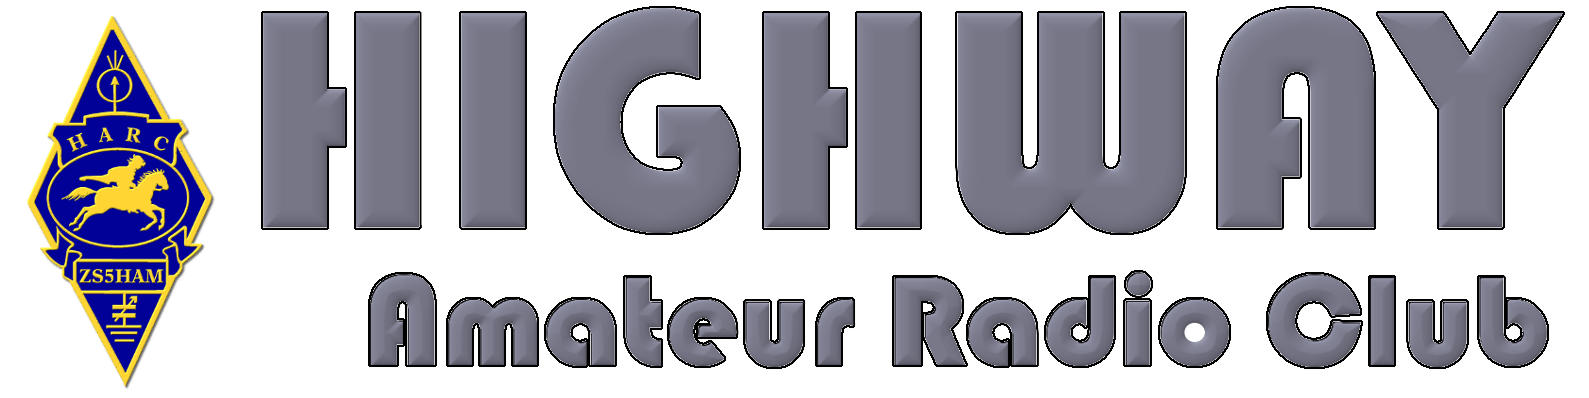 Highway Amateur Radio Club